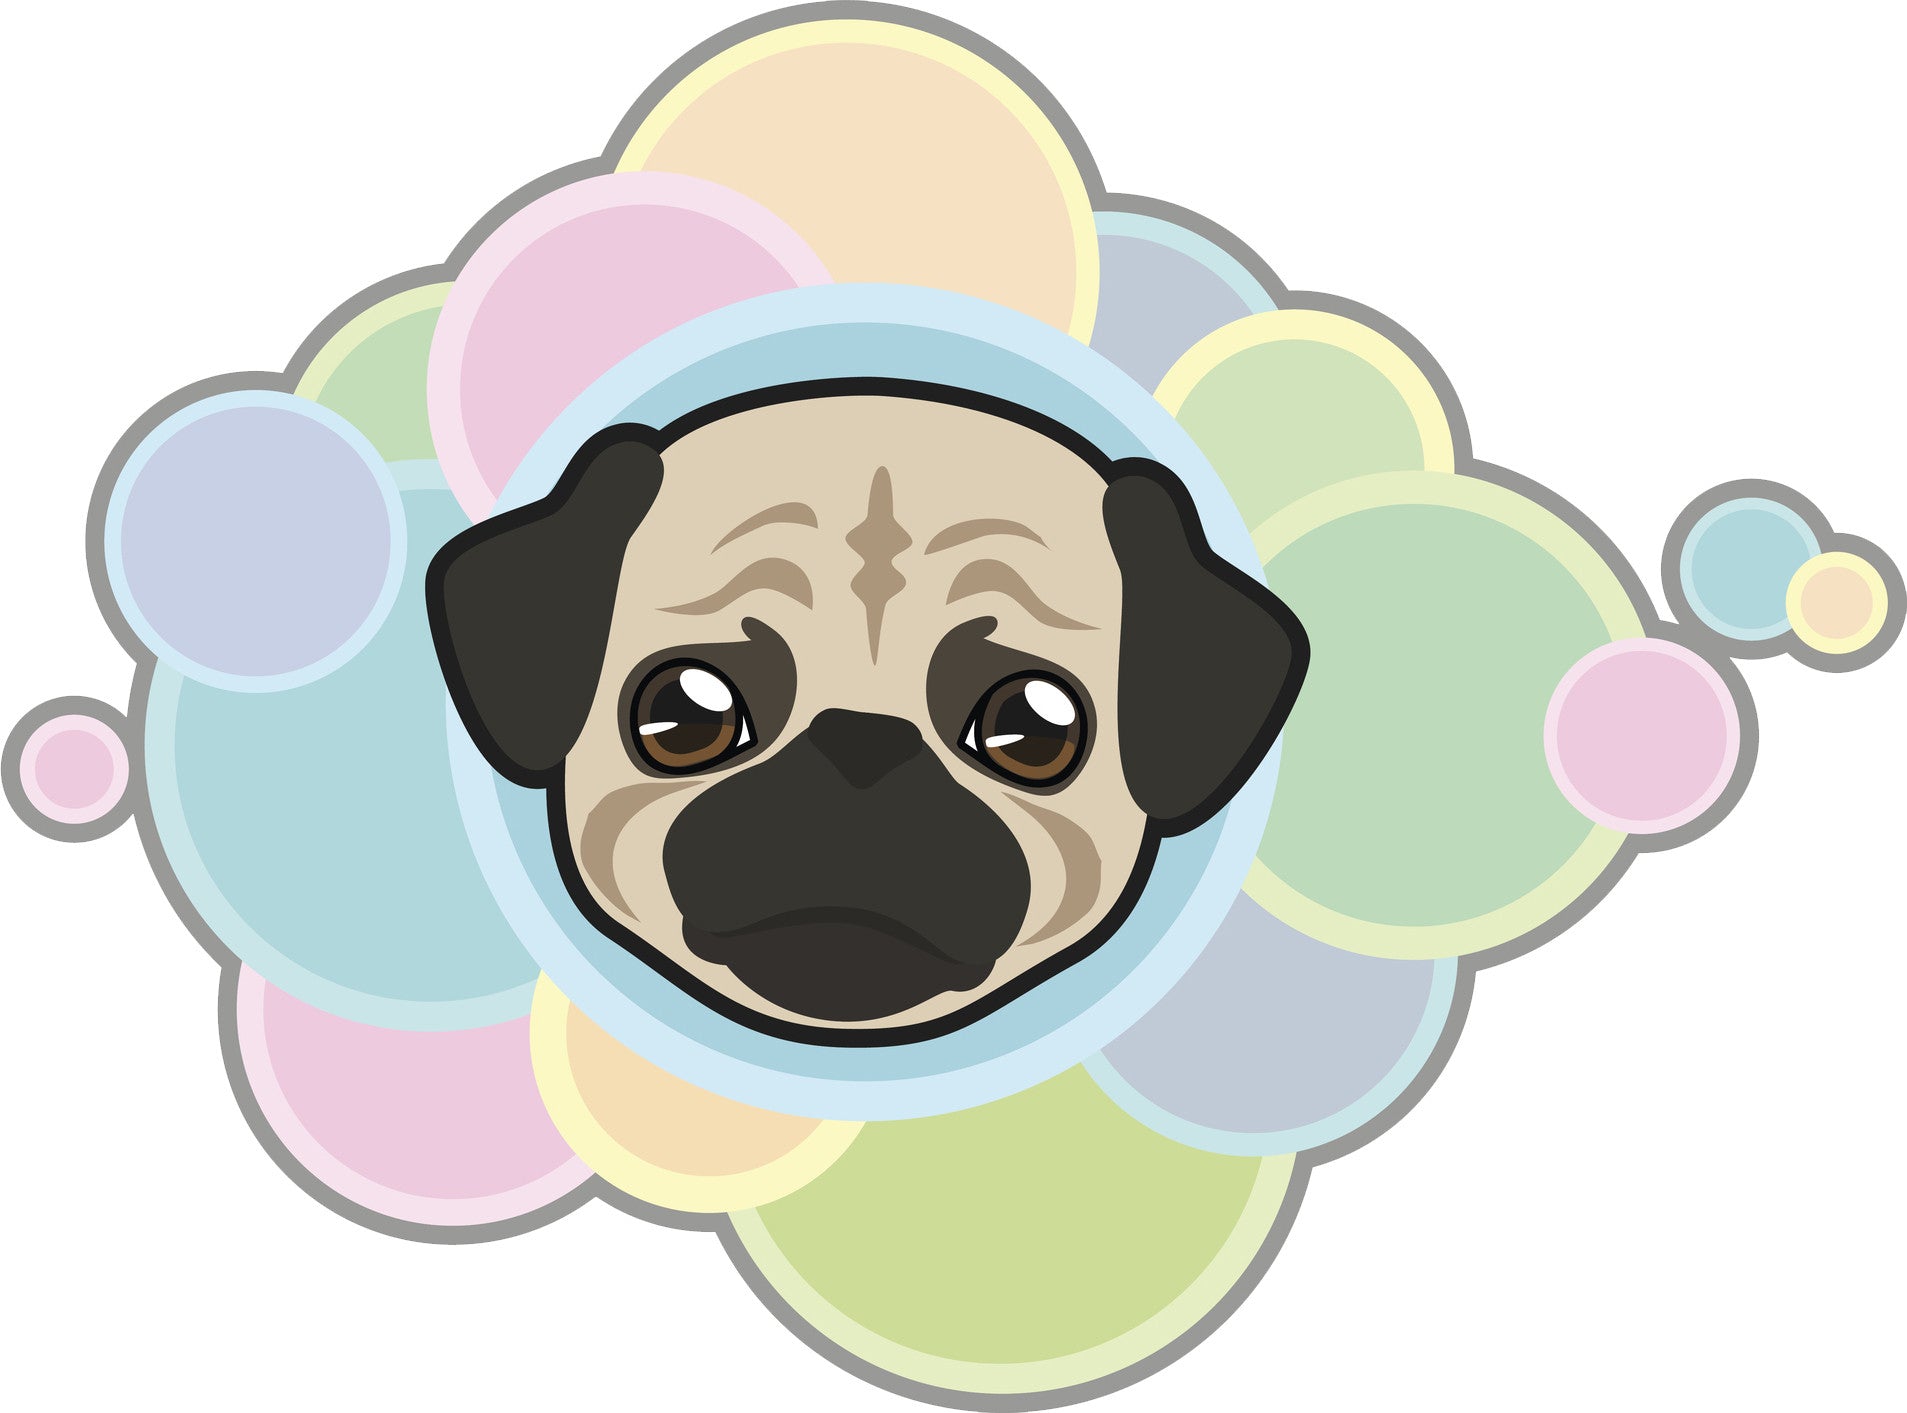 Cute Adorable Kawaii Puppy Dog Cartoon with Rainbow Bubbles - Pug Vinyl Decal Sticker